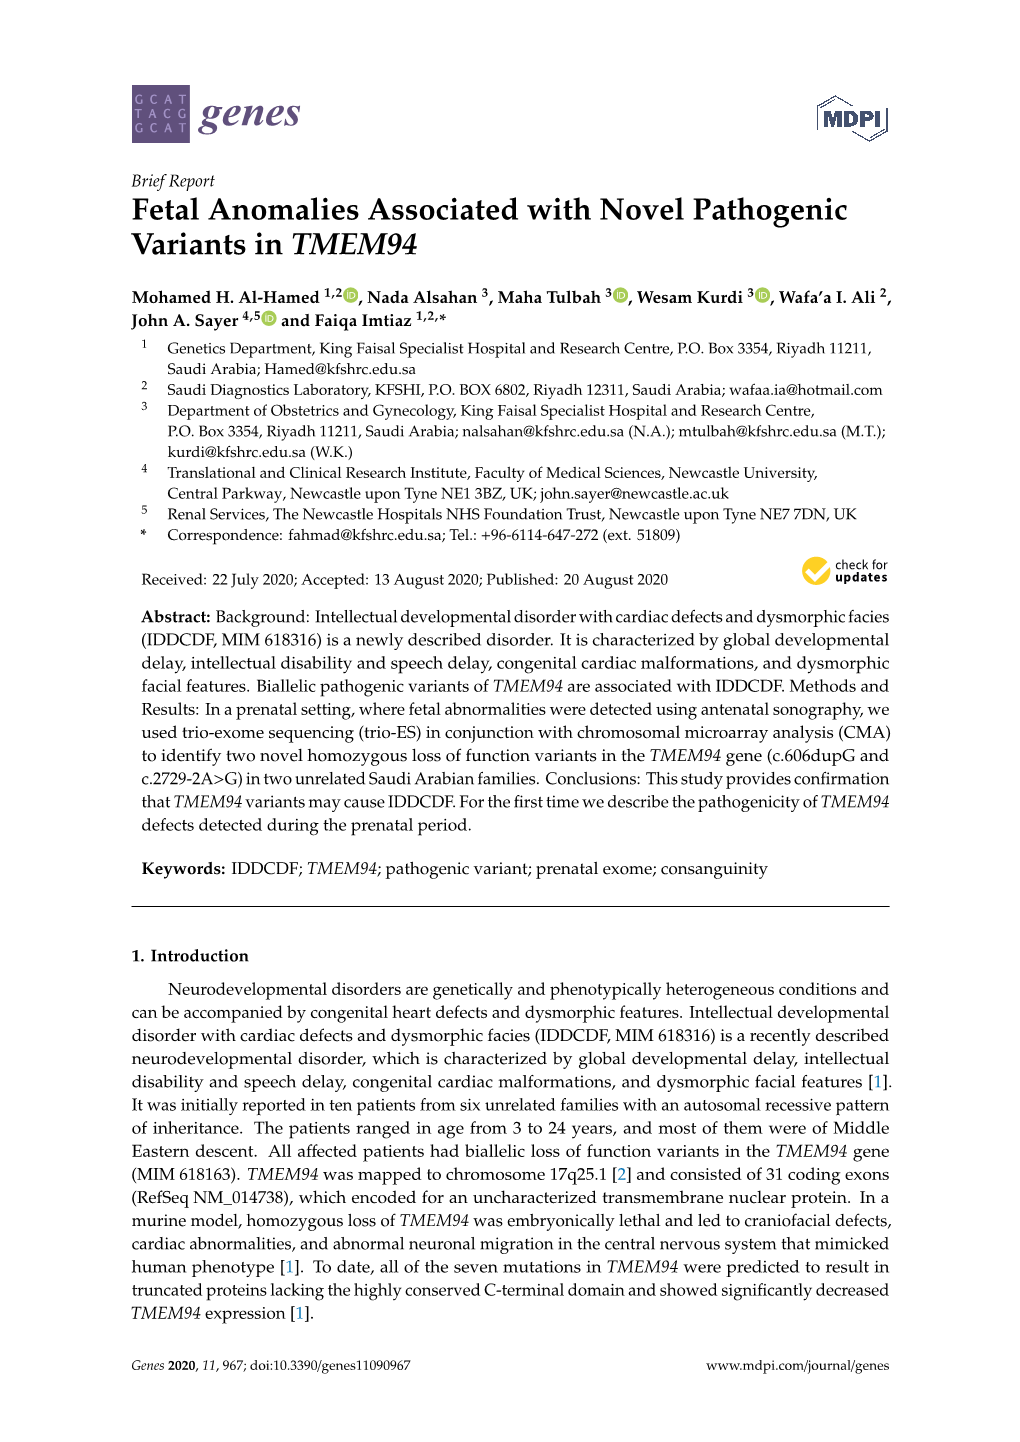 Fetal Anomalies Associated with Novel Pathogenic Variants in TMEM94